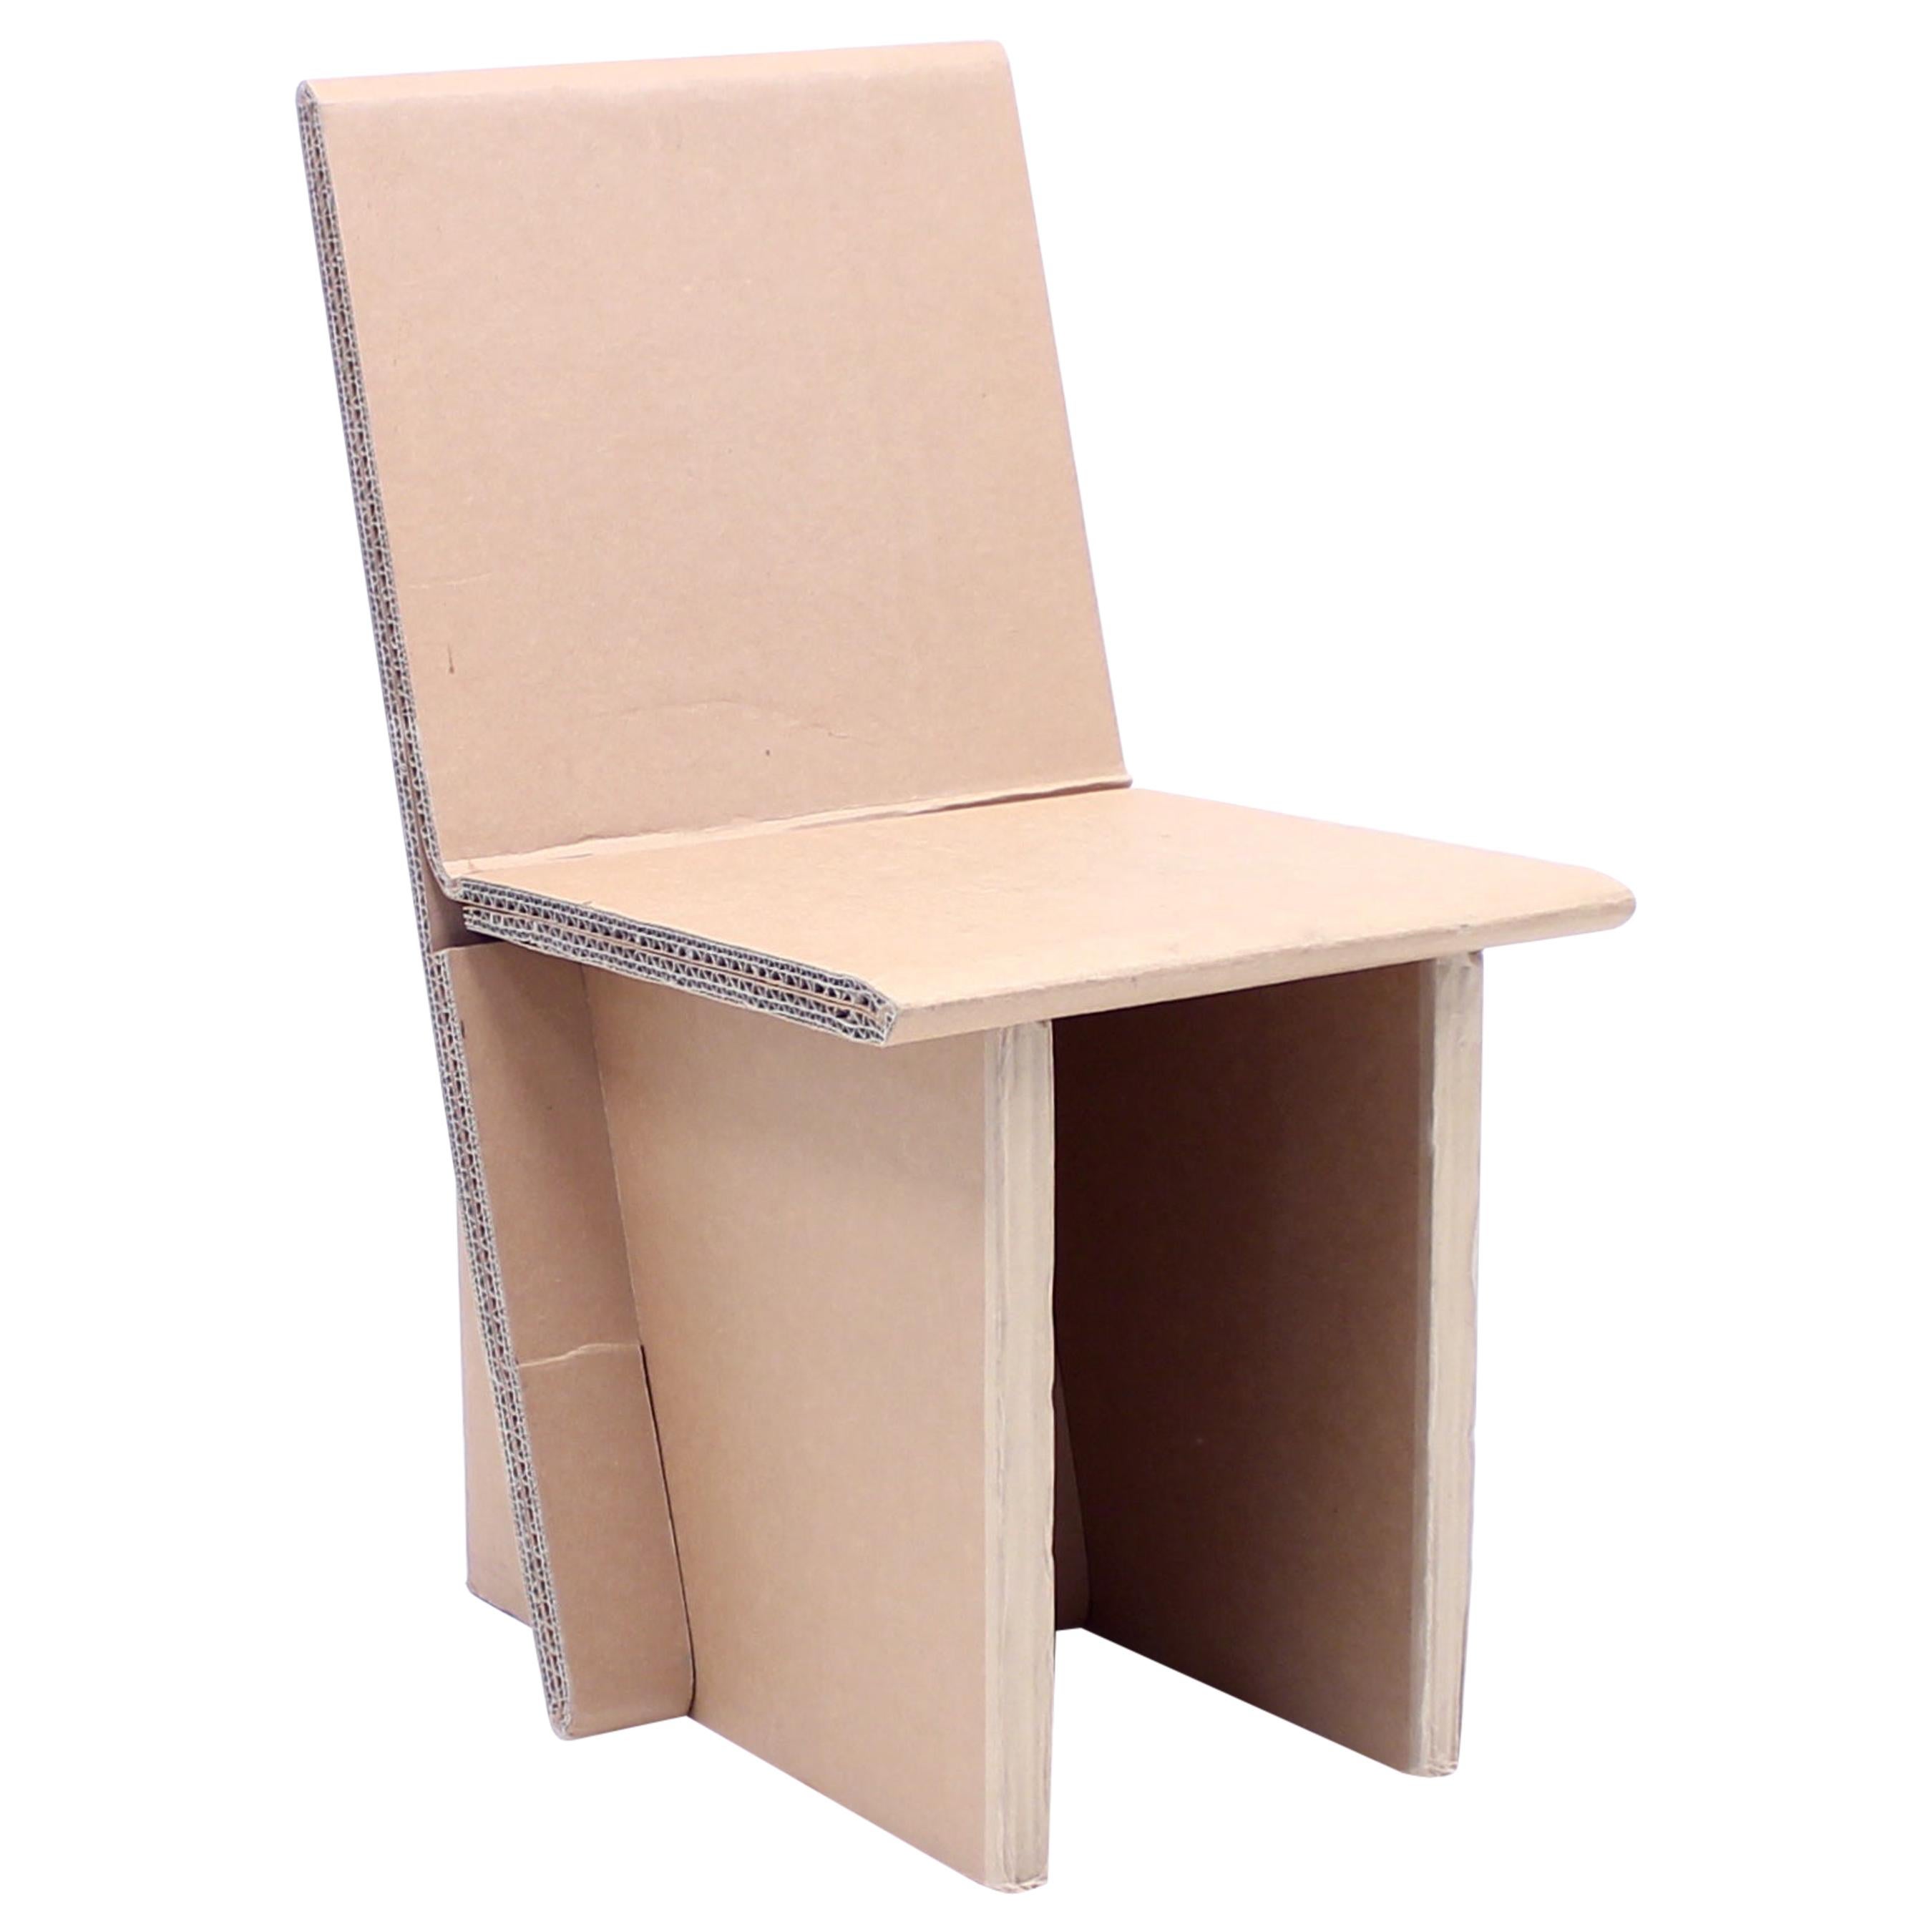 Sergej Gerasimenko, Limited Edition Cardboard Chair for Returmöbler, circa 2010